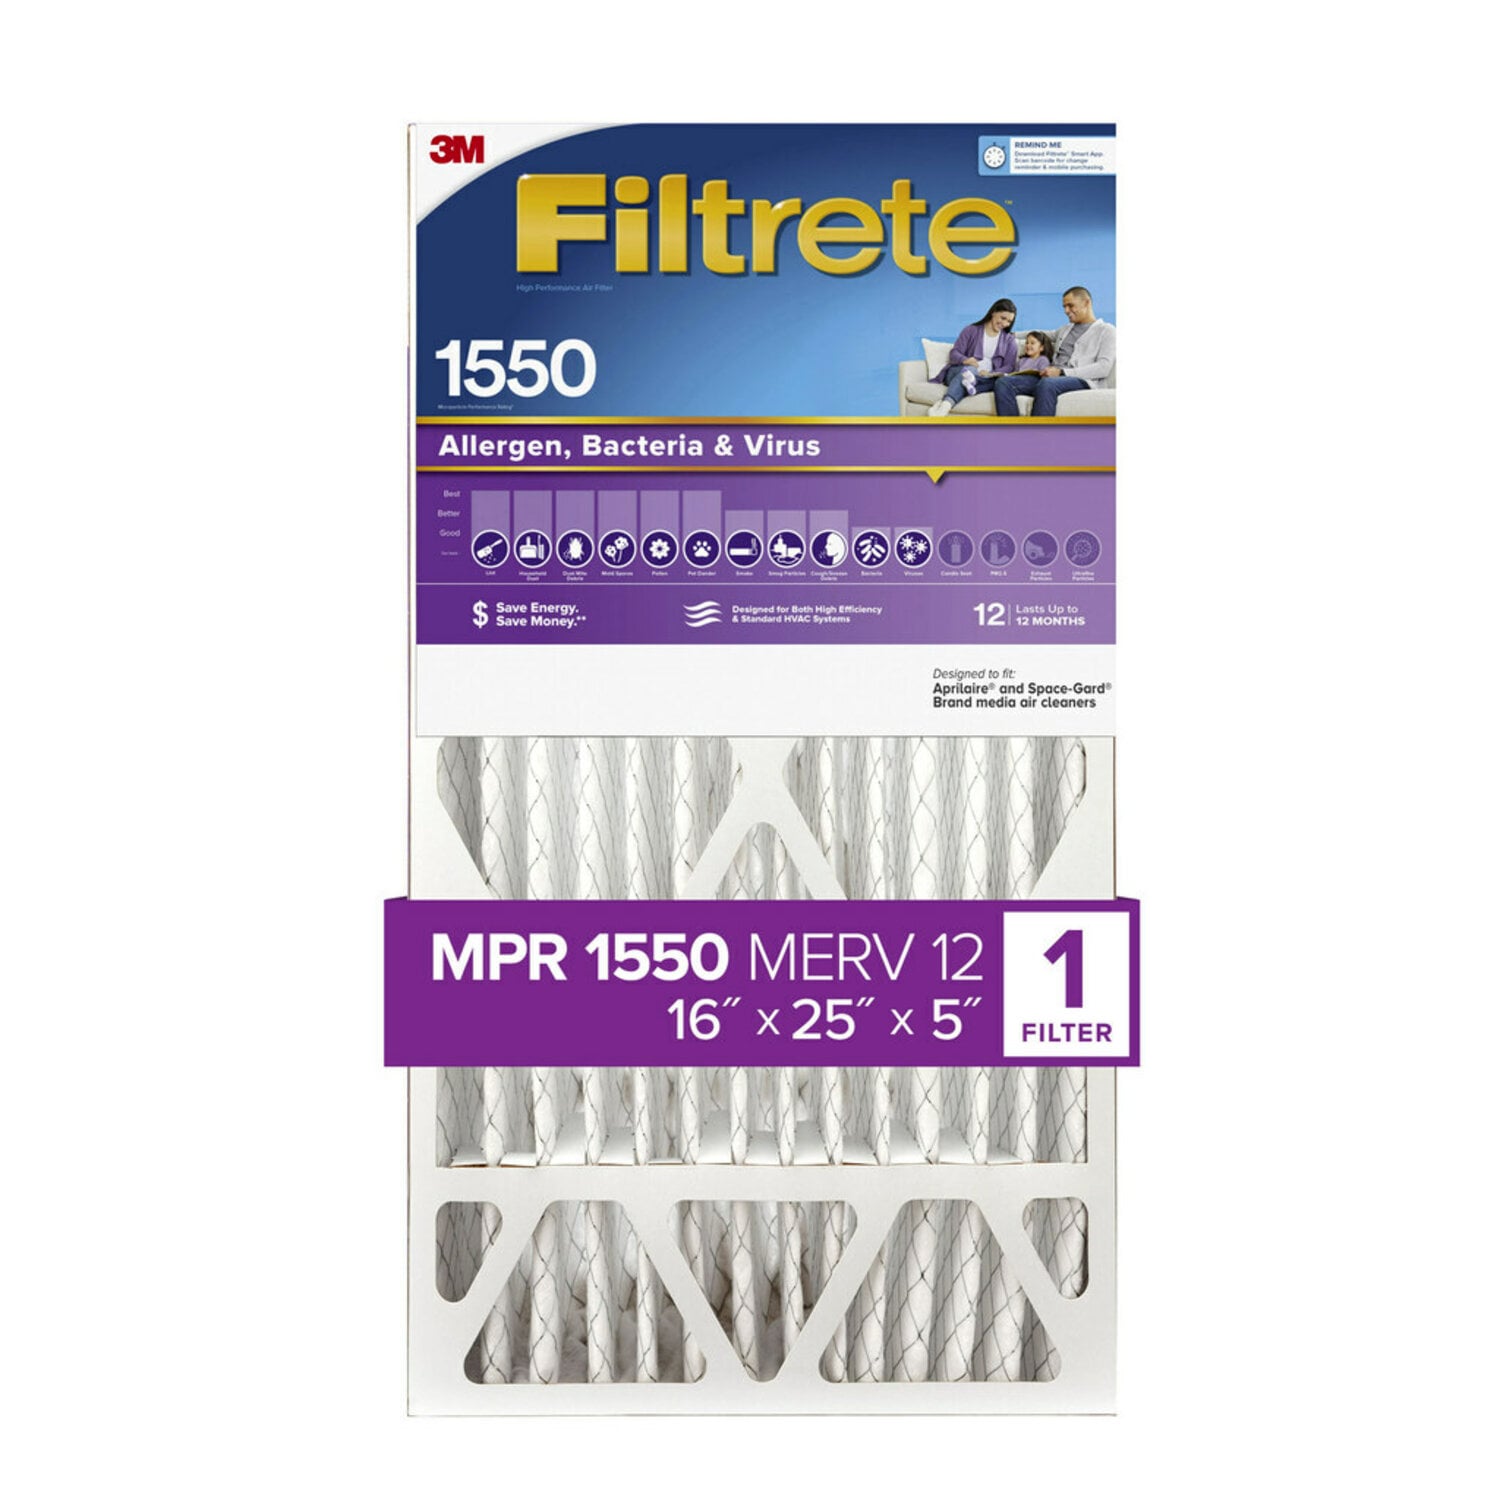 7100186854 - Filtrete Ultra Allergen Reduction Deep Pleat Filter NDP01-5IN-2, 16 in x 25 in x 5 in (40,6 cm x 63,5 cm x 12,7 cm)